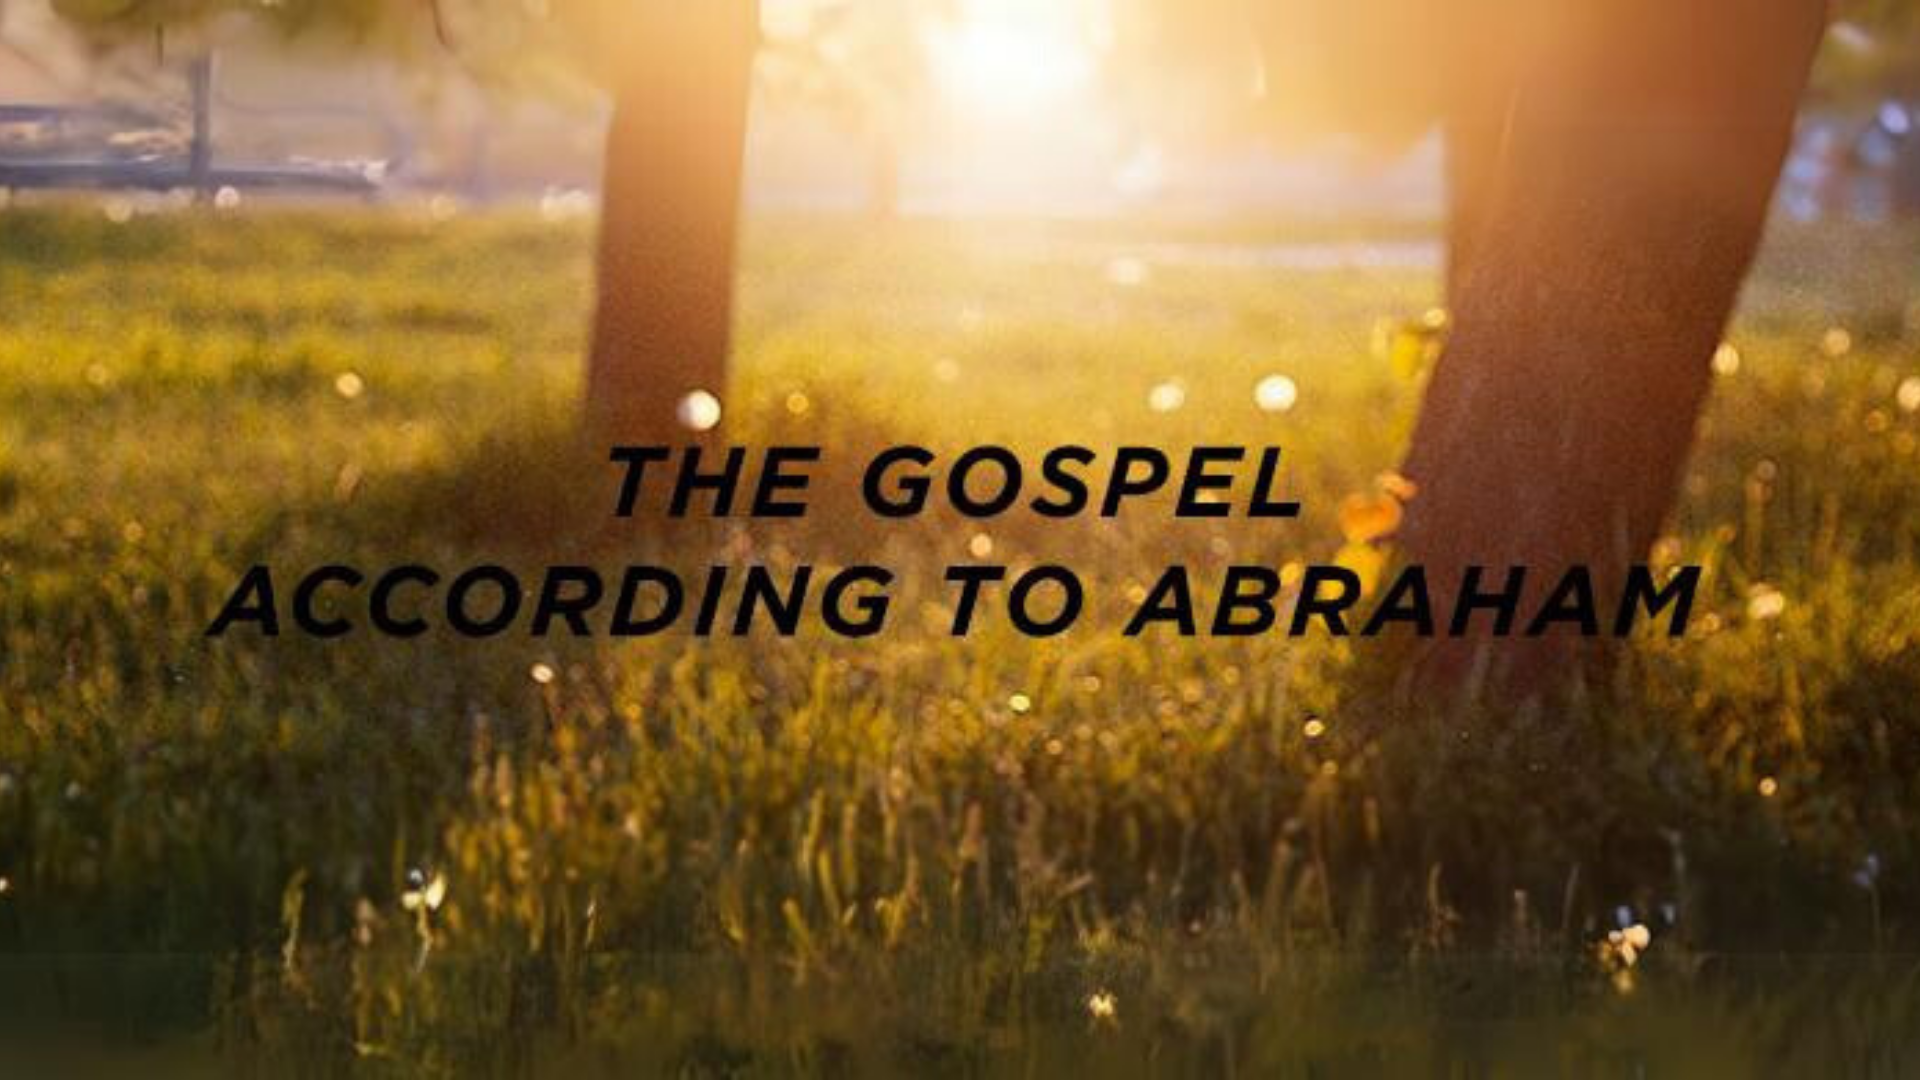 The Gospel According to Abraham